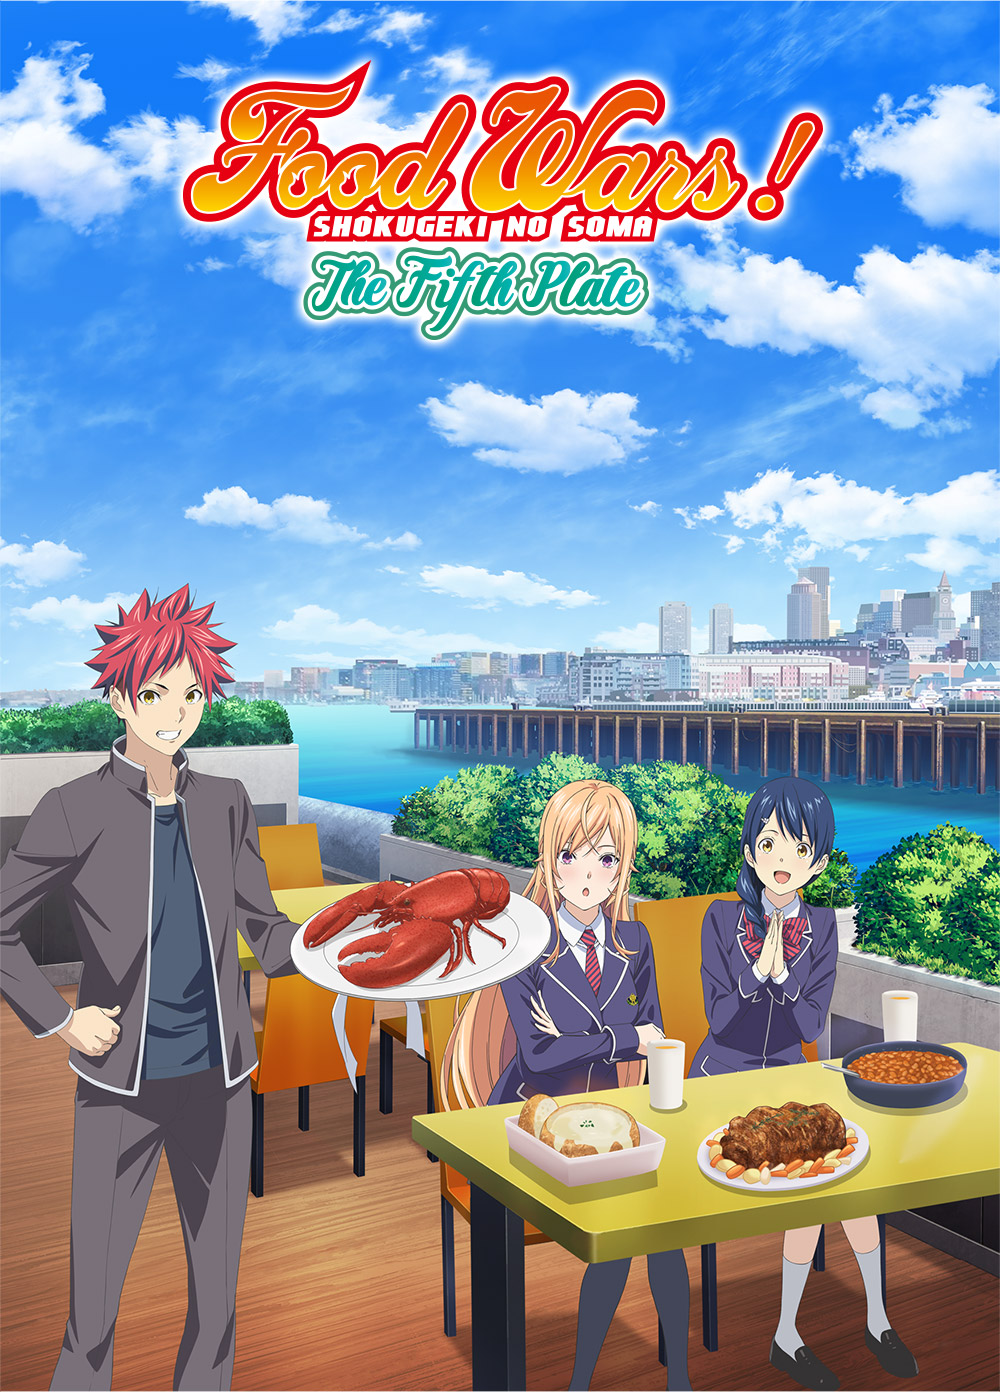 Food Wars! The 5th Plate Shokugeki no Soma - Assista na Crunchyroll